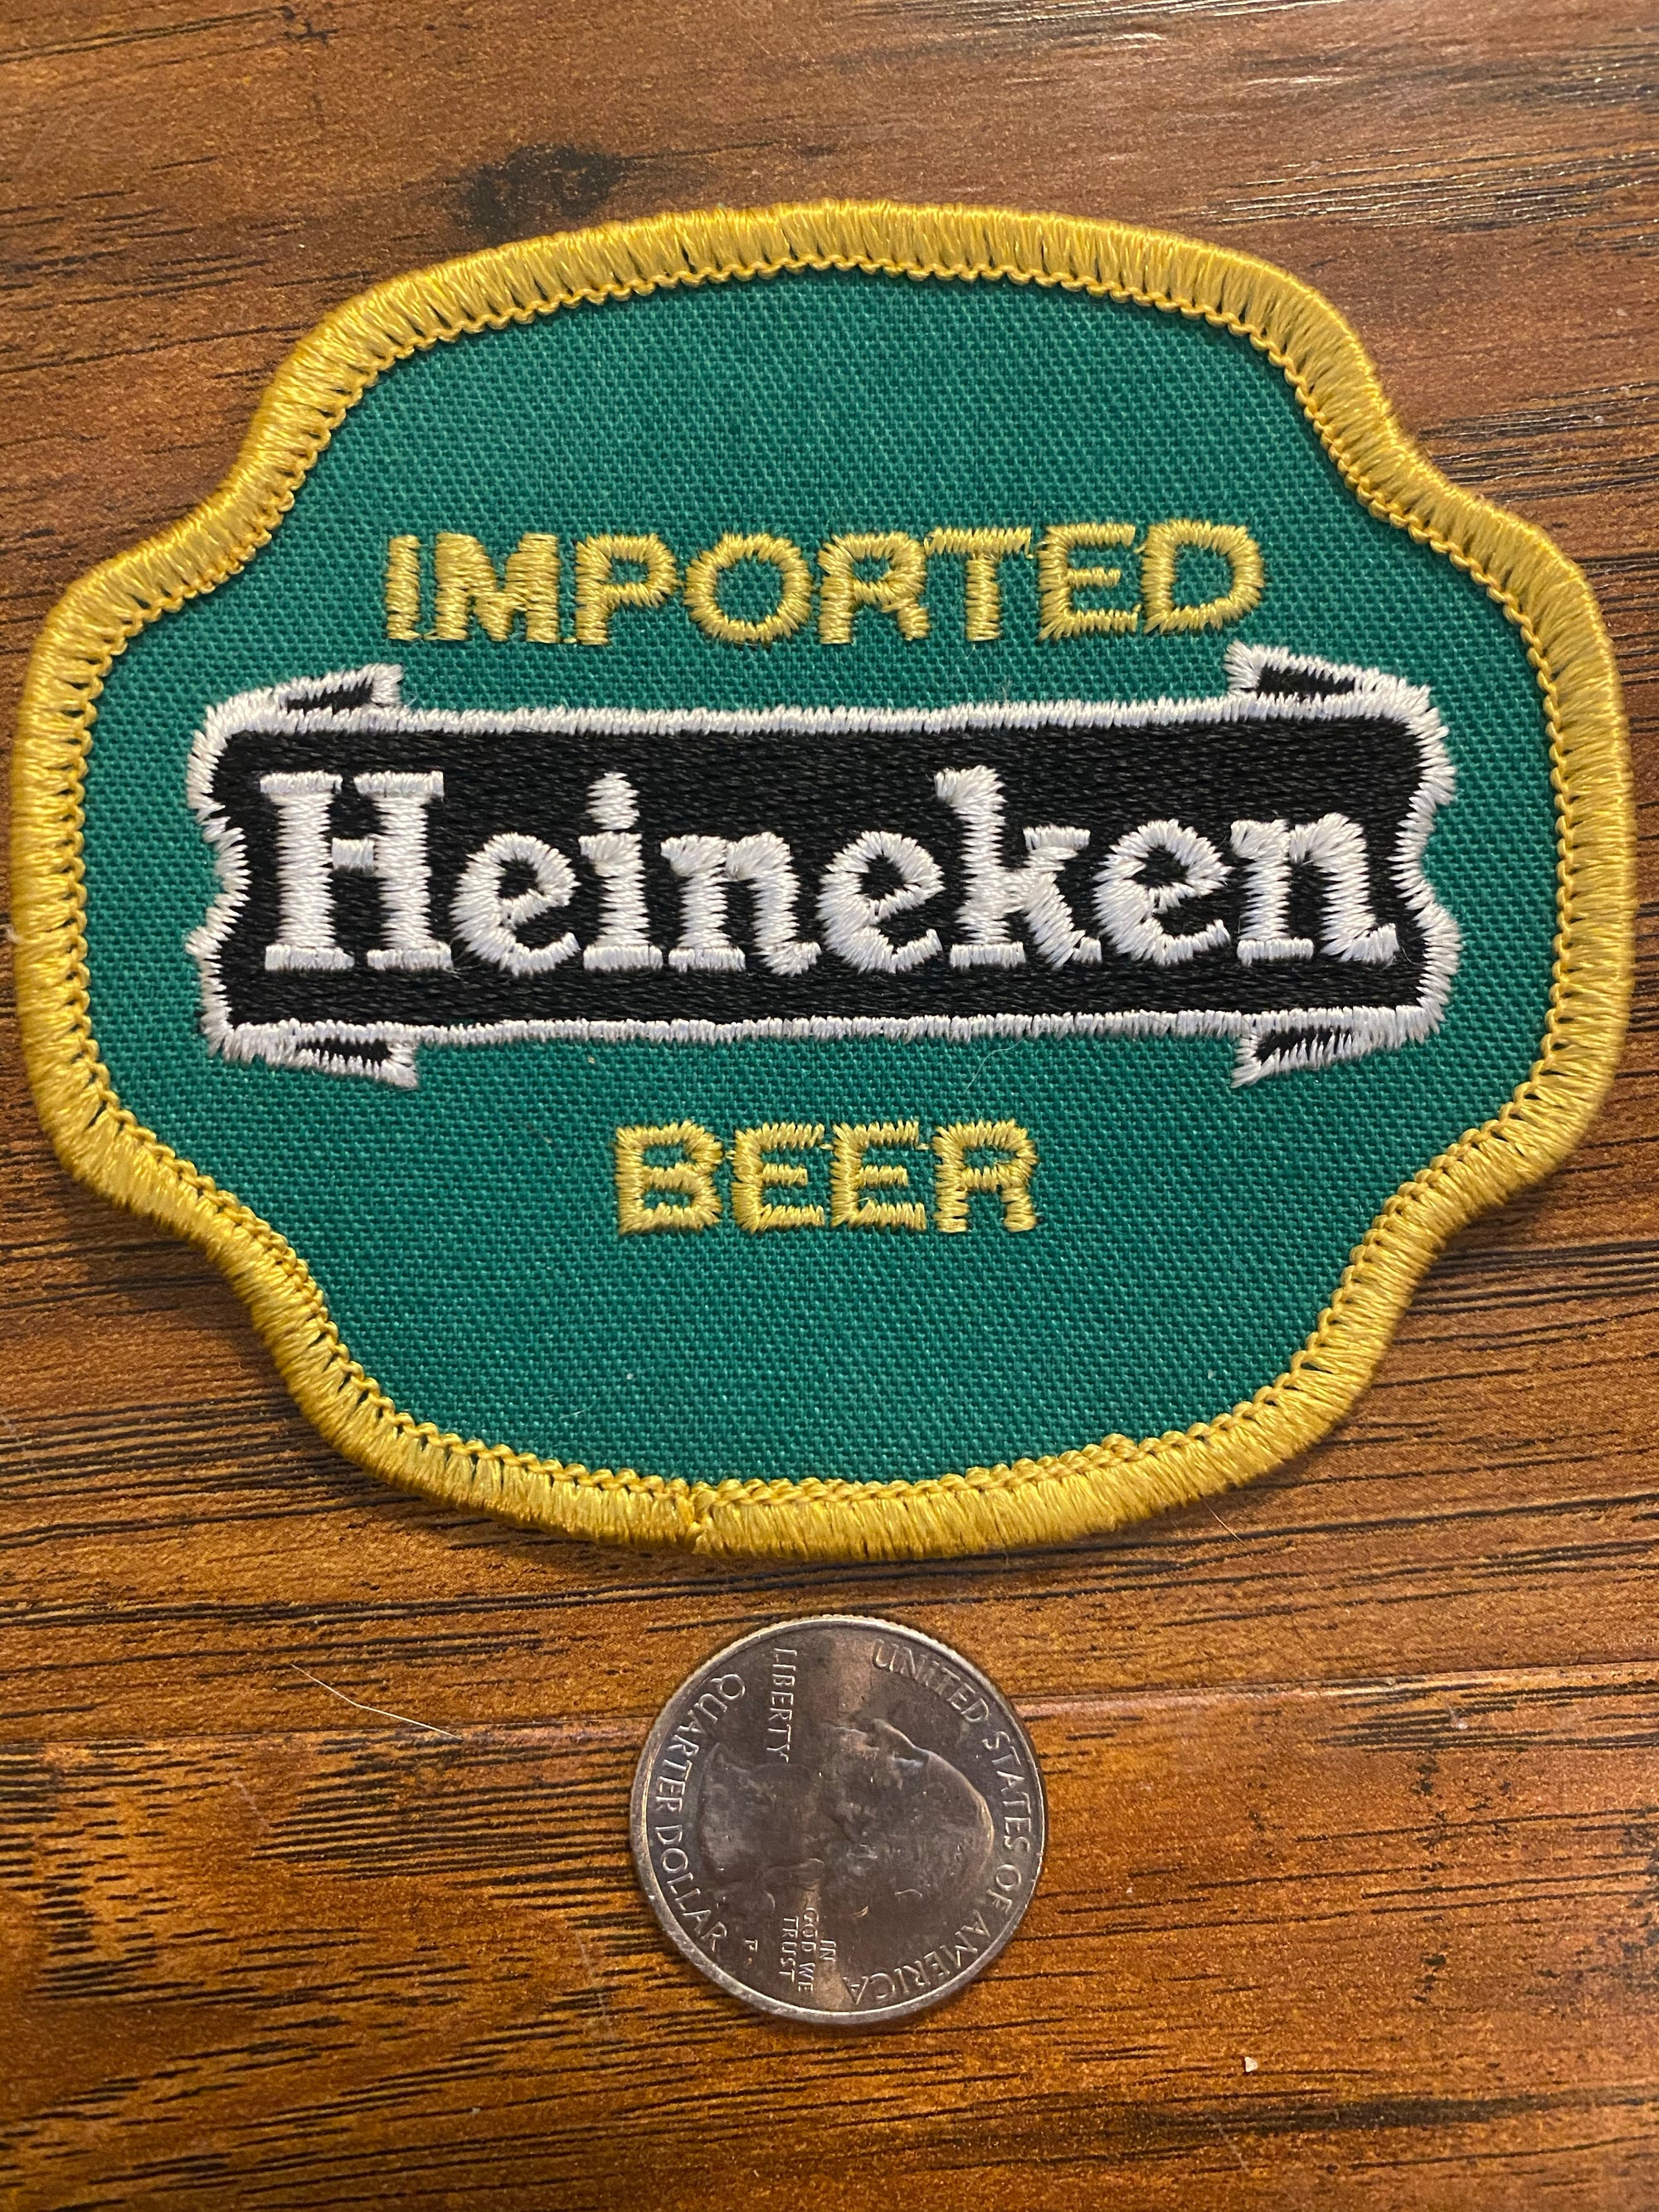 Vintage Imported Heineken